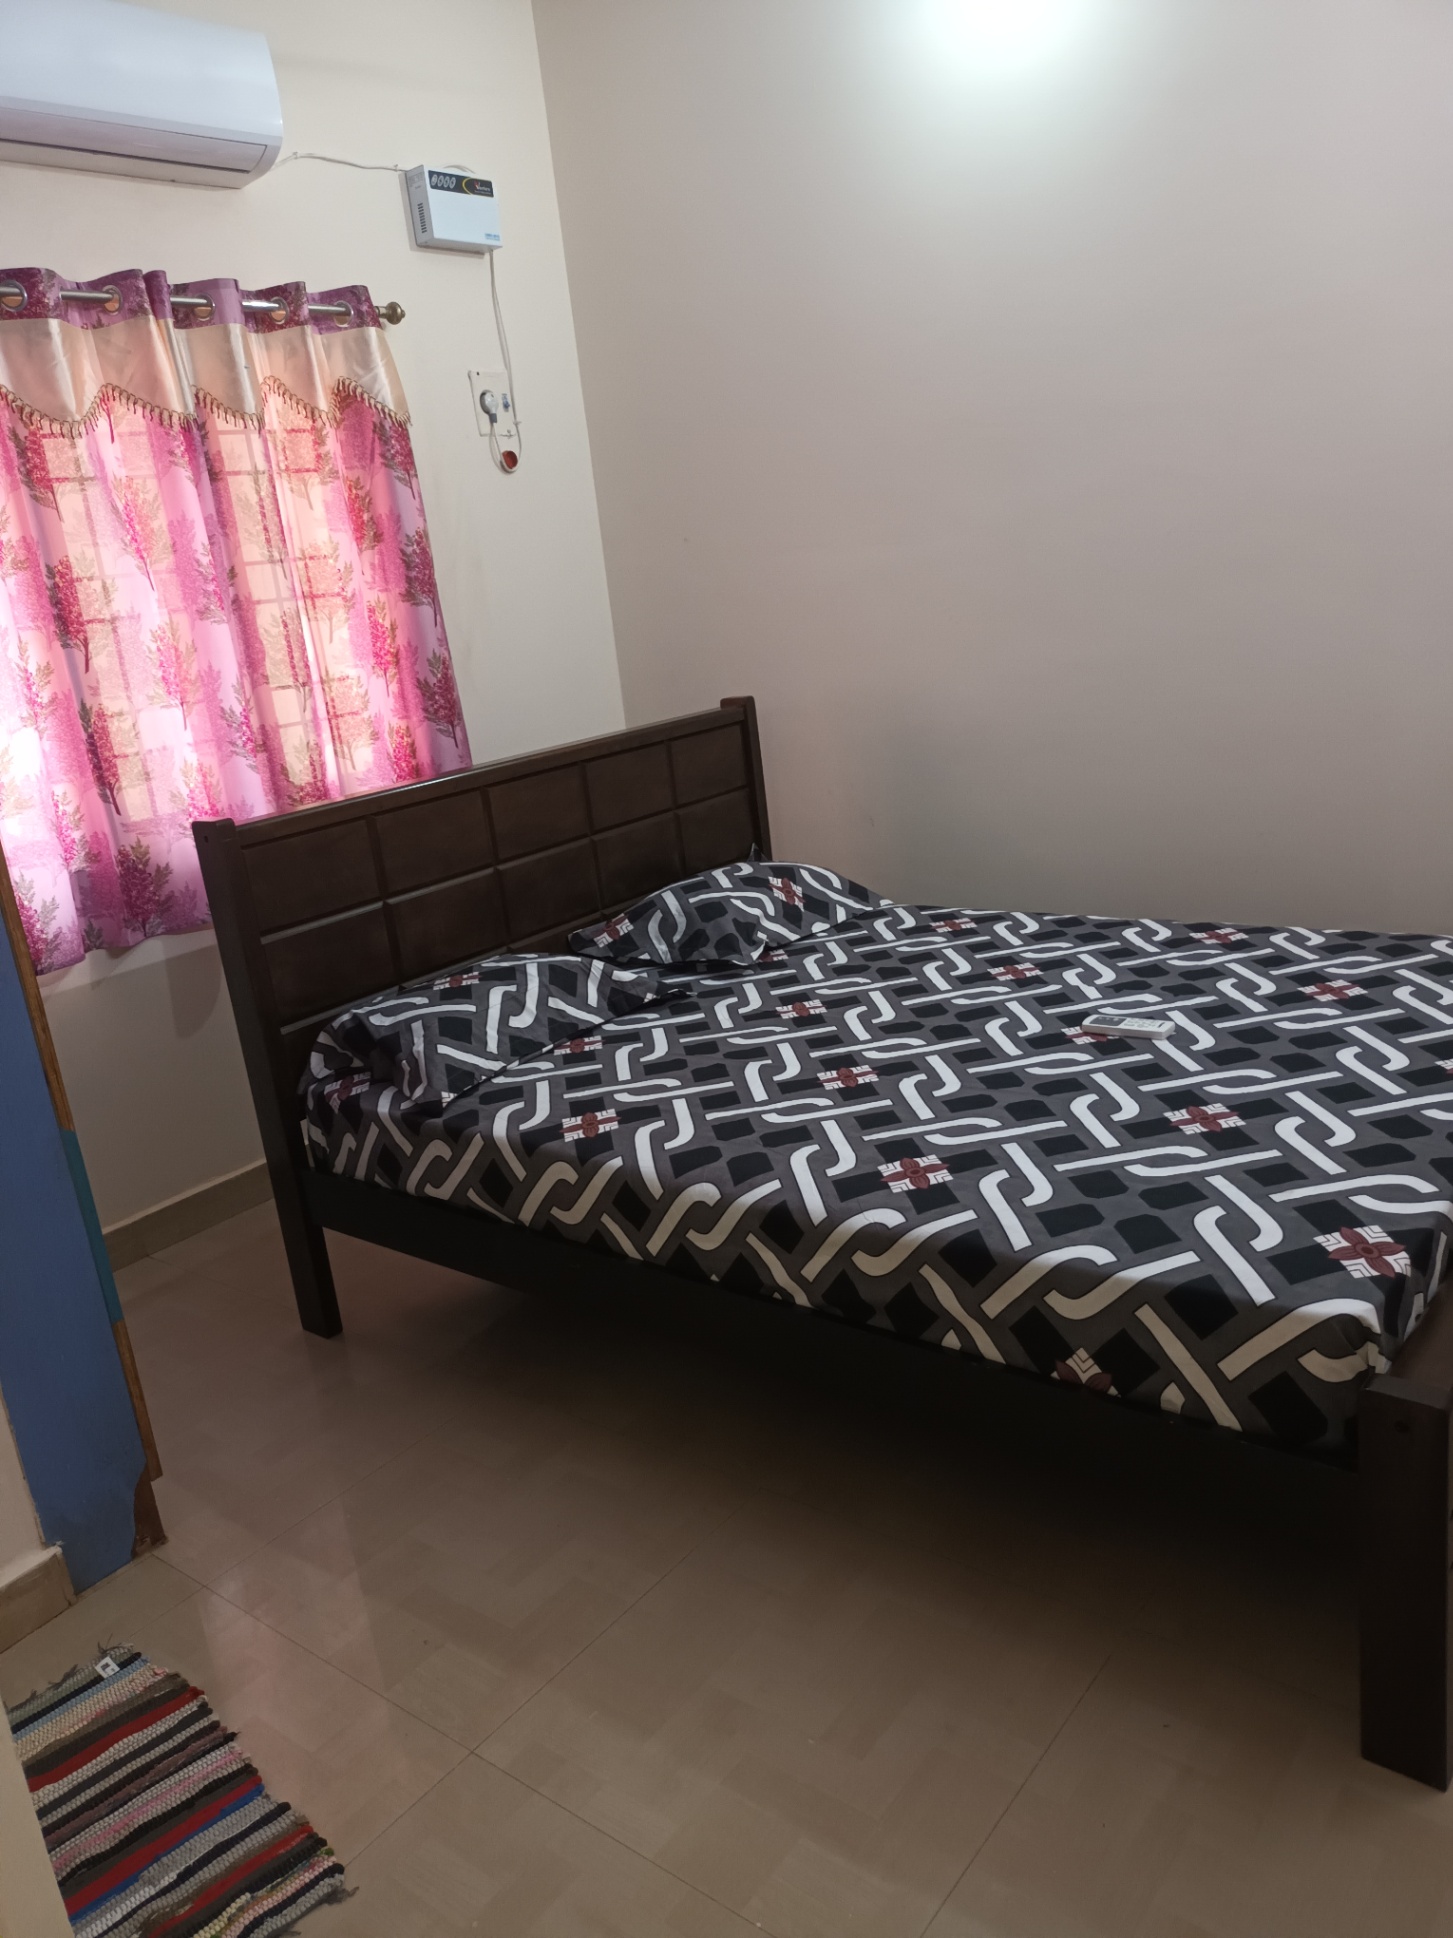 2 Bed/ 2 Bath Rent Apartment/ Flat; 1,100 sq. ft. carpet area, Furnished for rent @16/6.Dr.Subbaraya nagar second street,Samiyar madam,Kodambakkam 